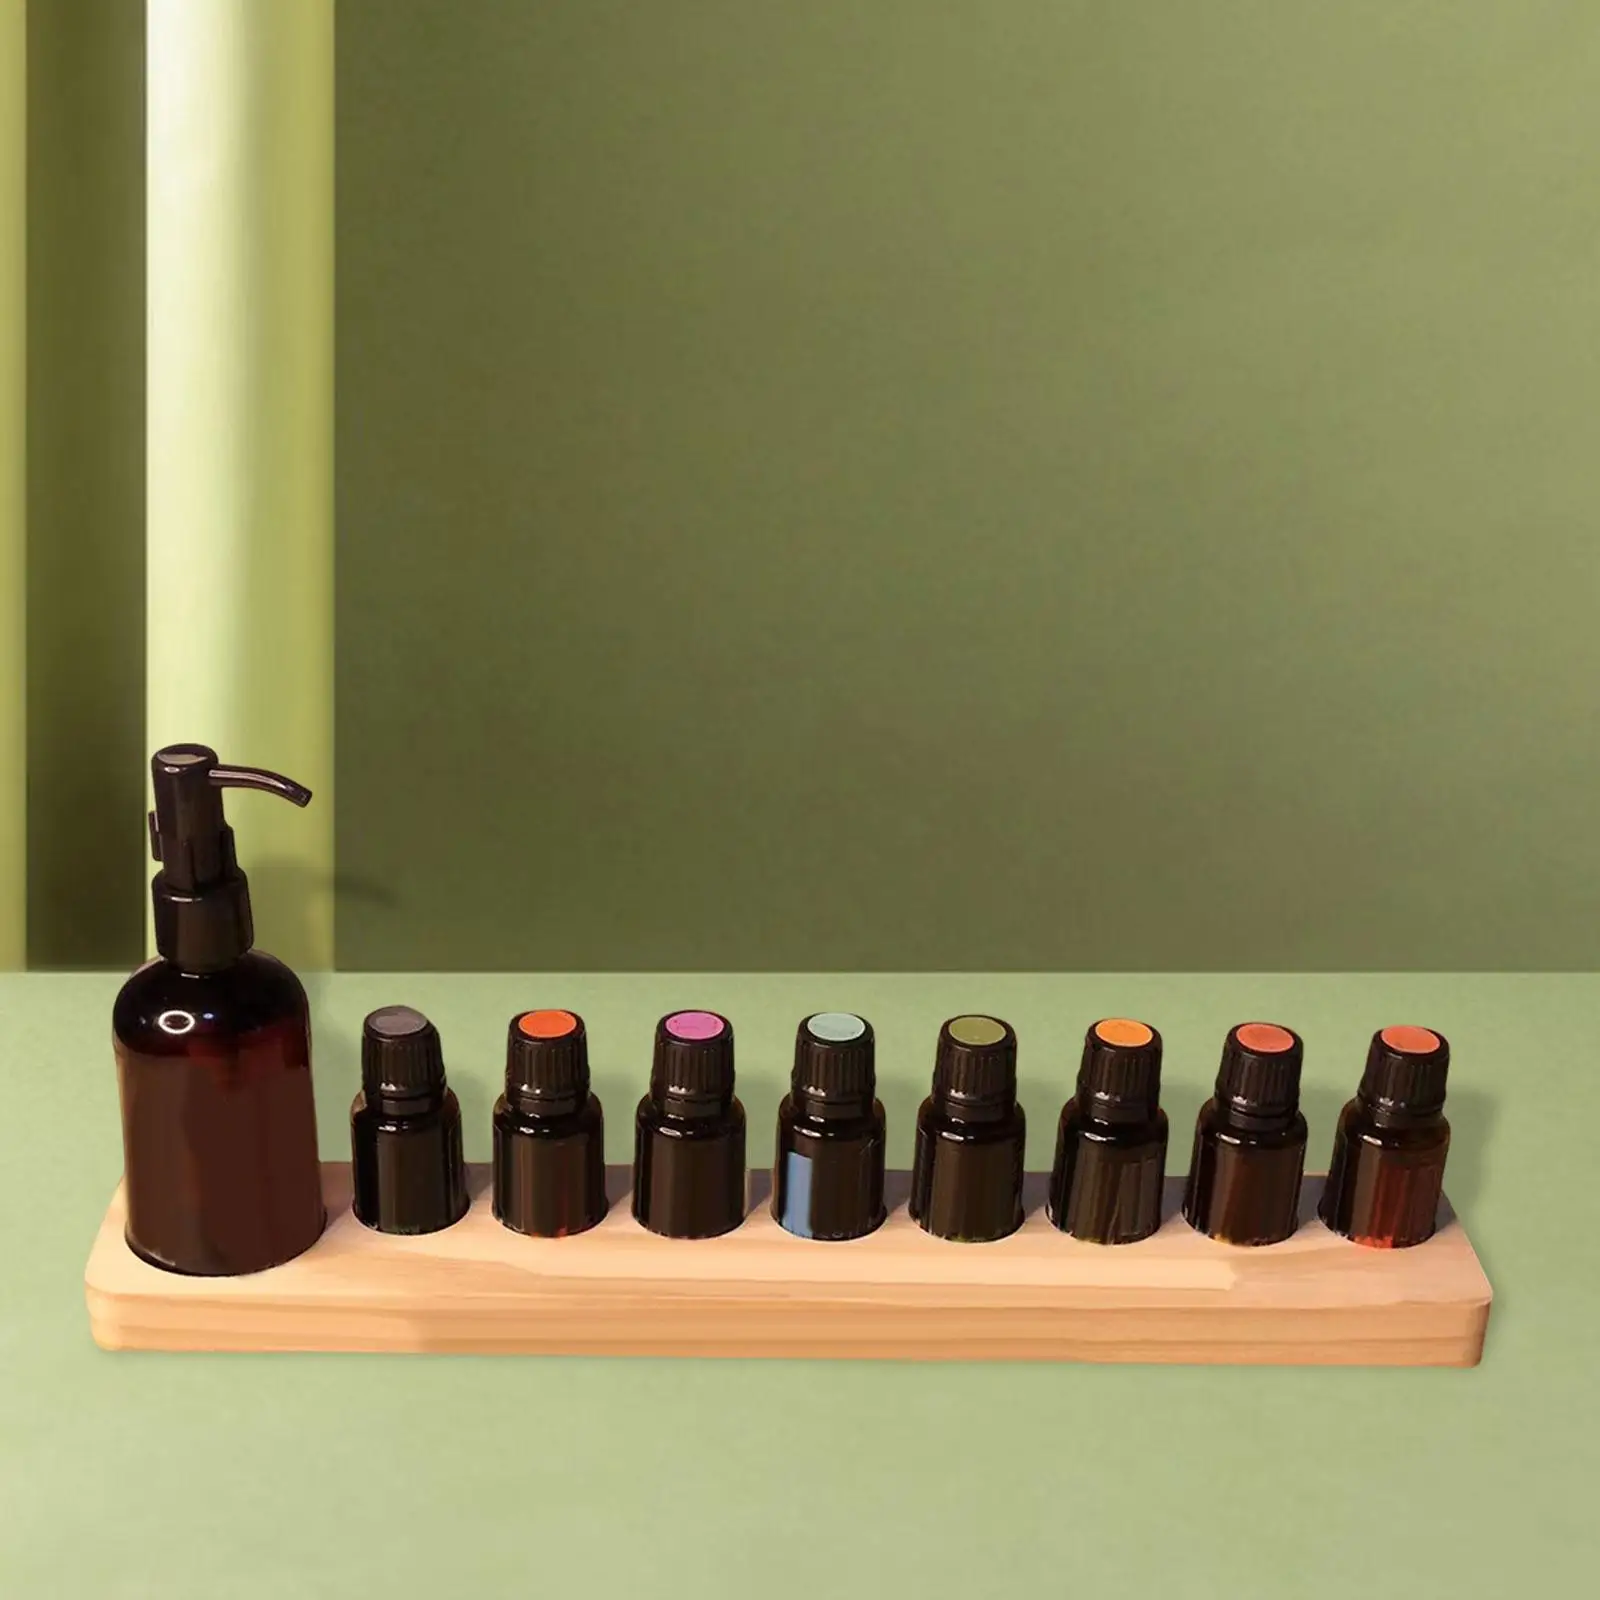 9 Hole Essential Oil Storage Rack Wooden Cosmetic Organizer Perfume Rack Desktop for 5ml 15ml 115ml Bottles Nail Polish Bottles